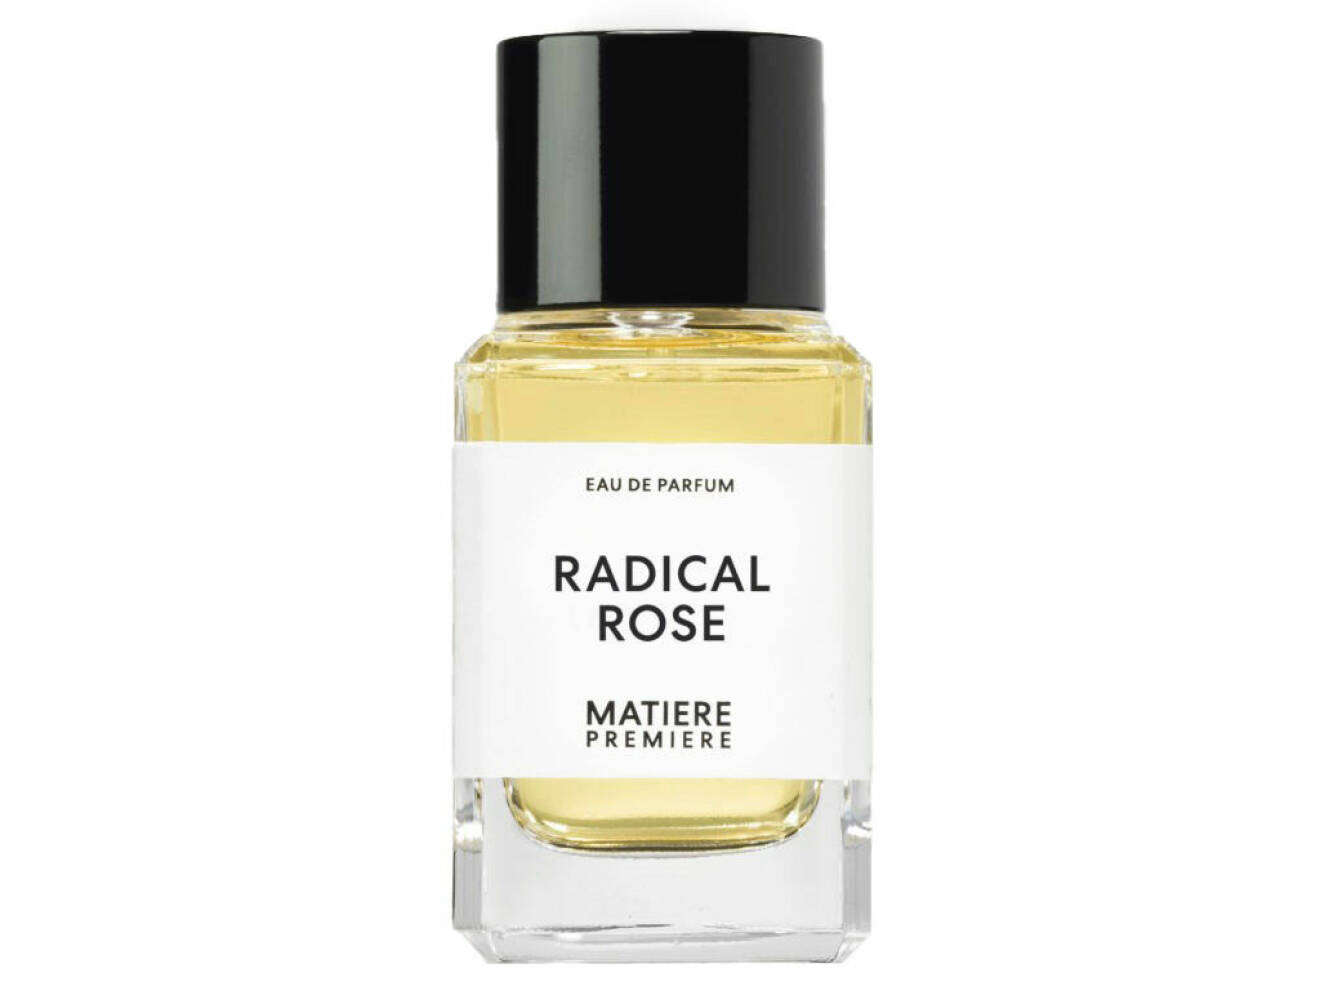 Parfym Radical rose från Matiere Premiere.